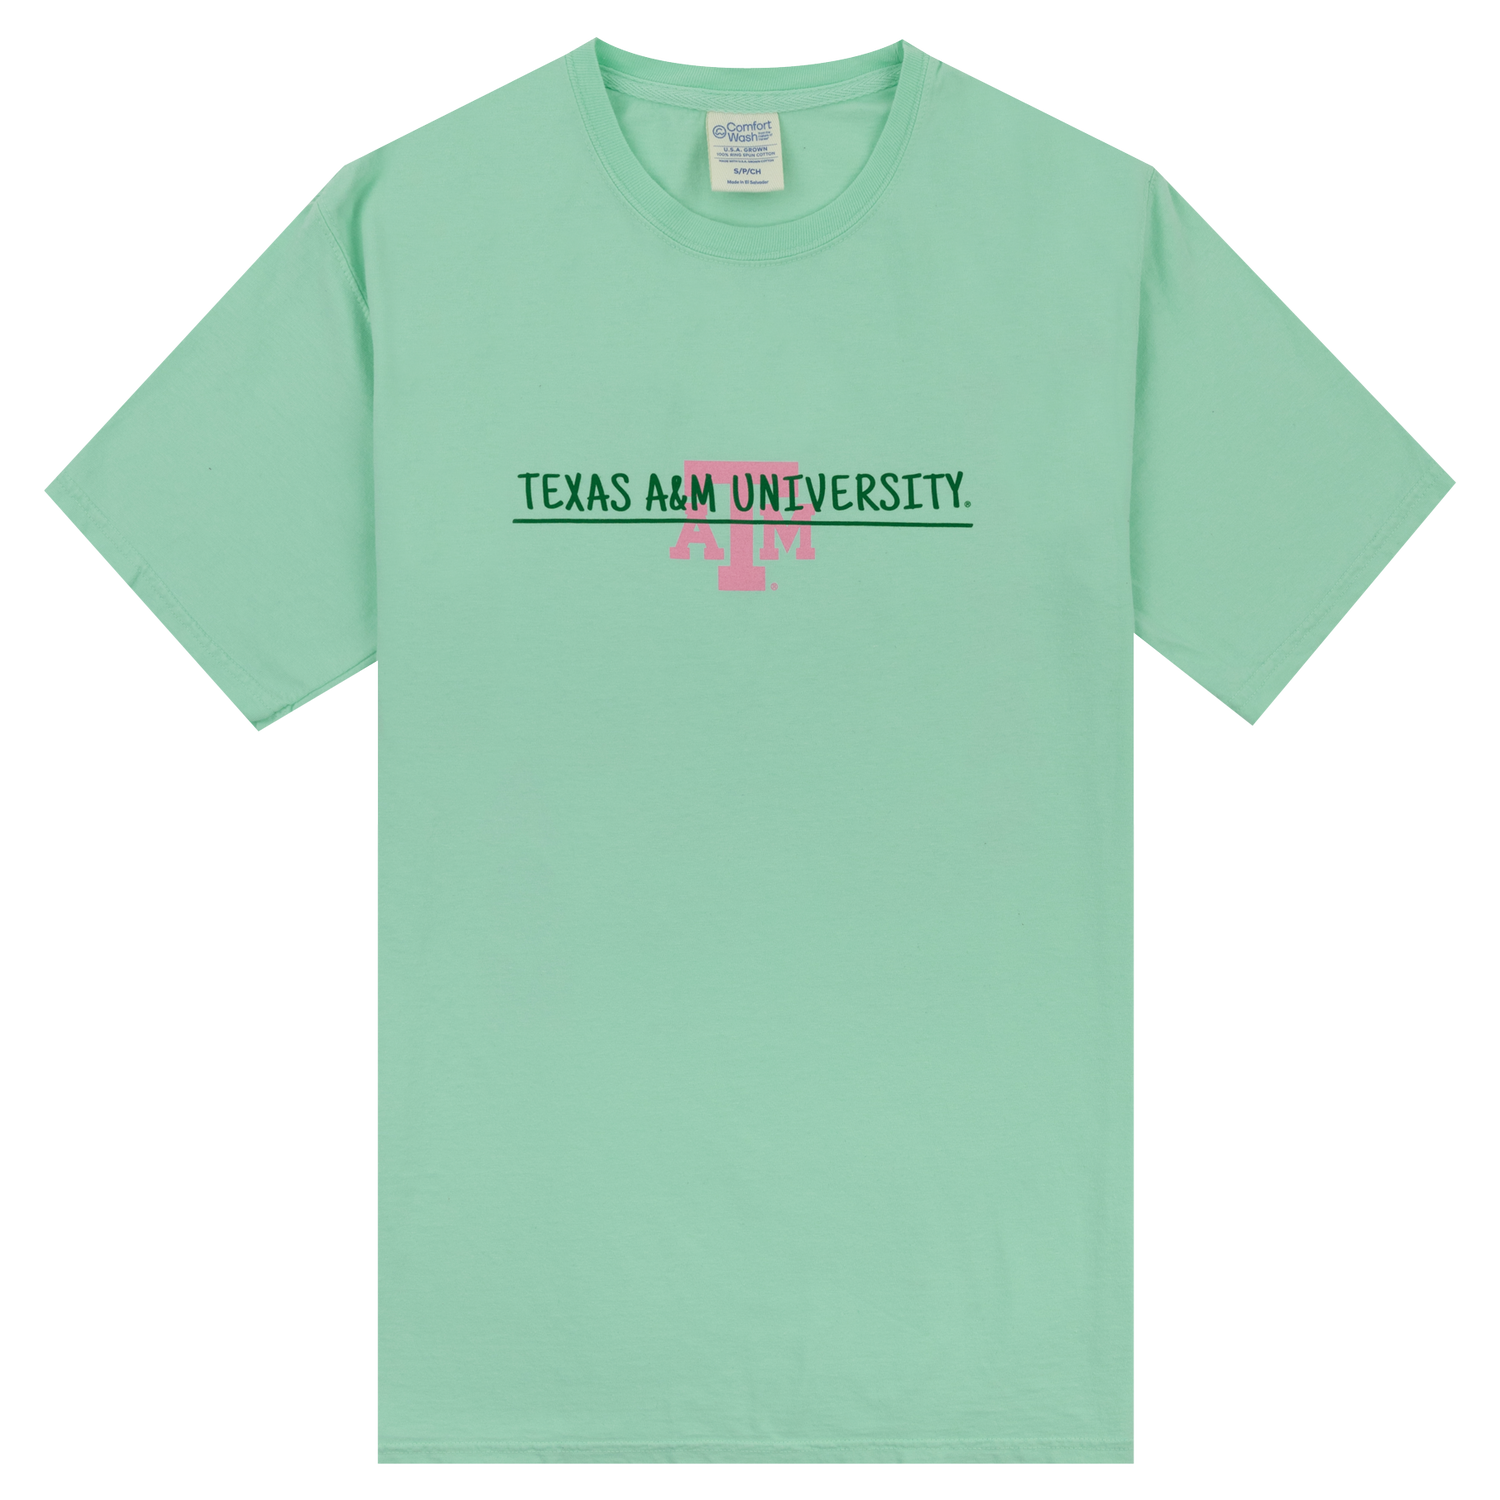 Texas A&M University Buildings T-Shirt